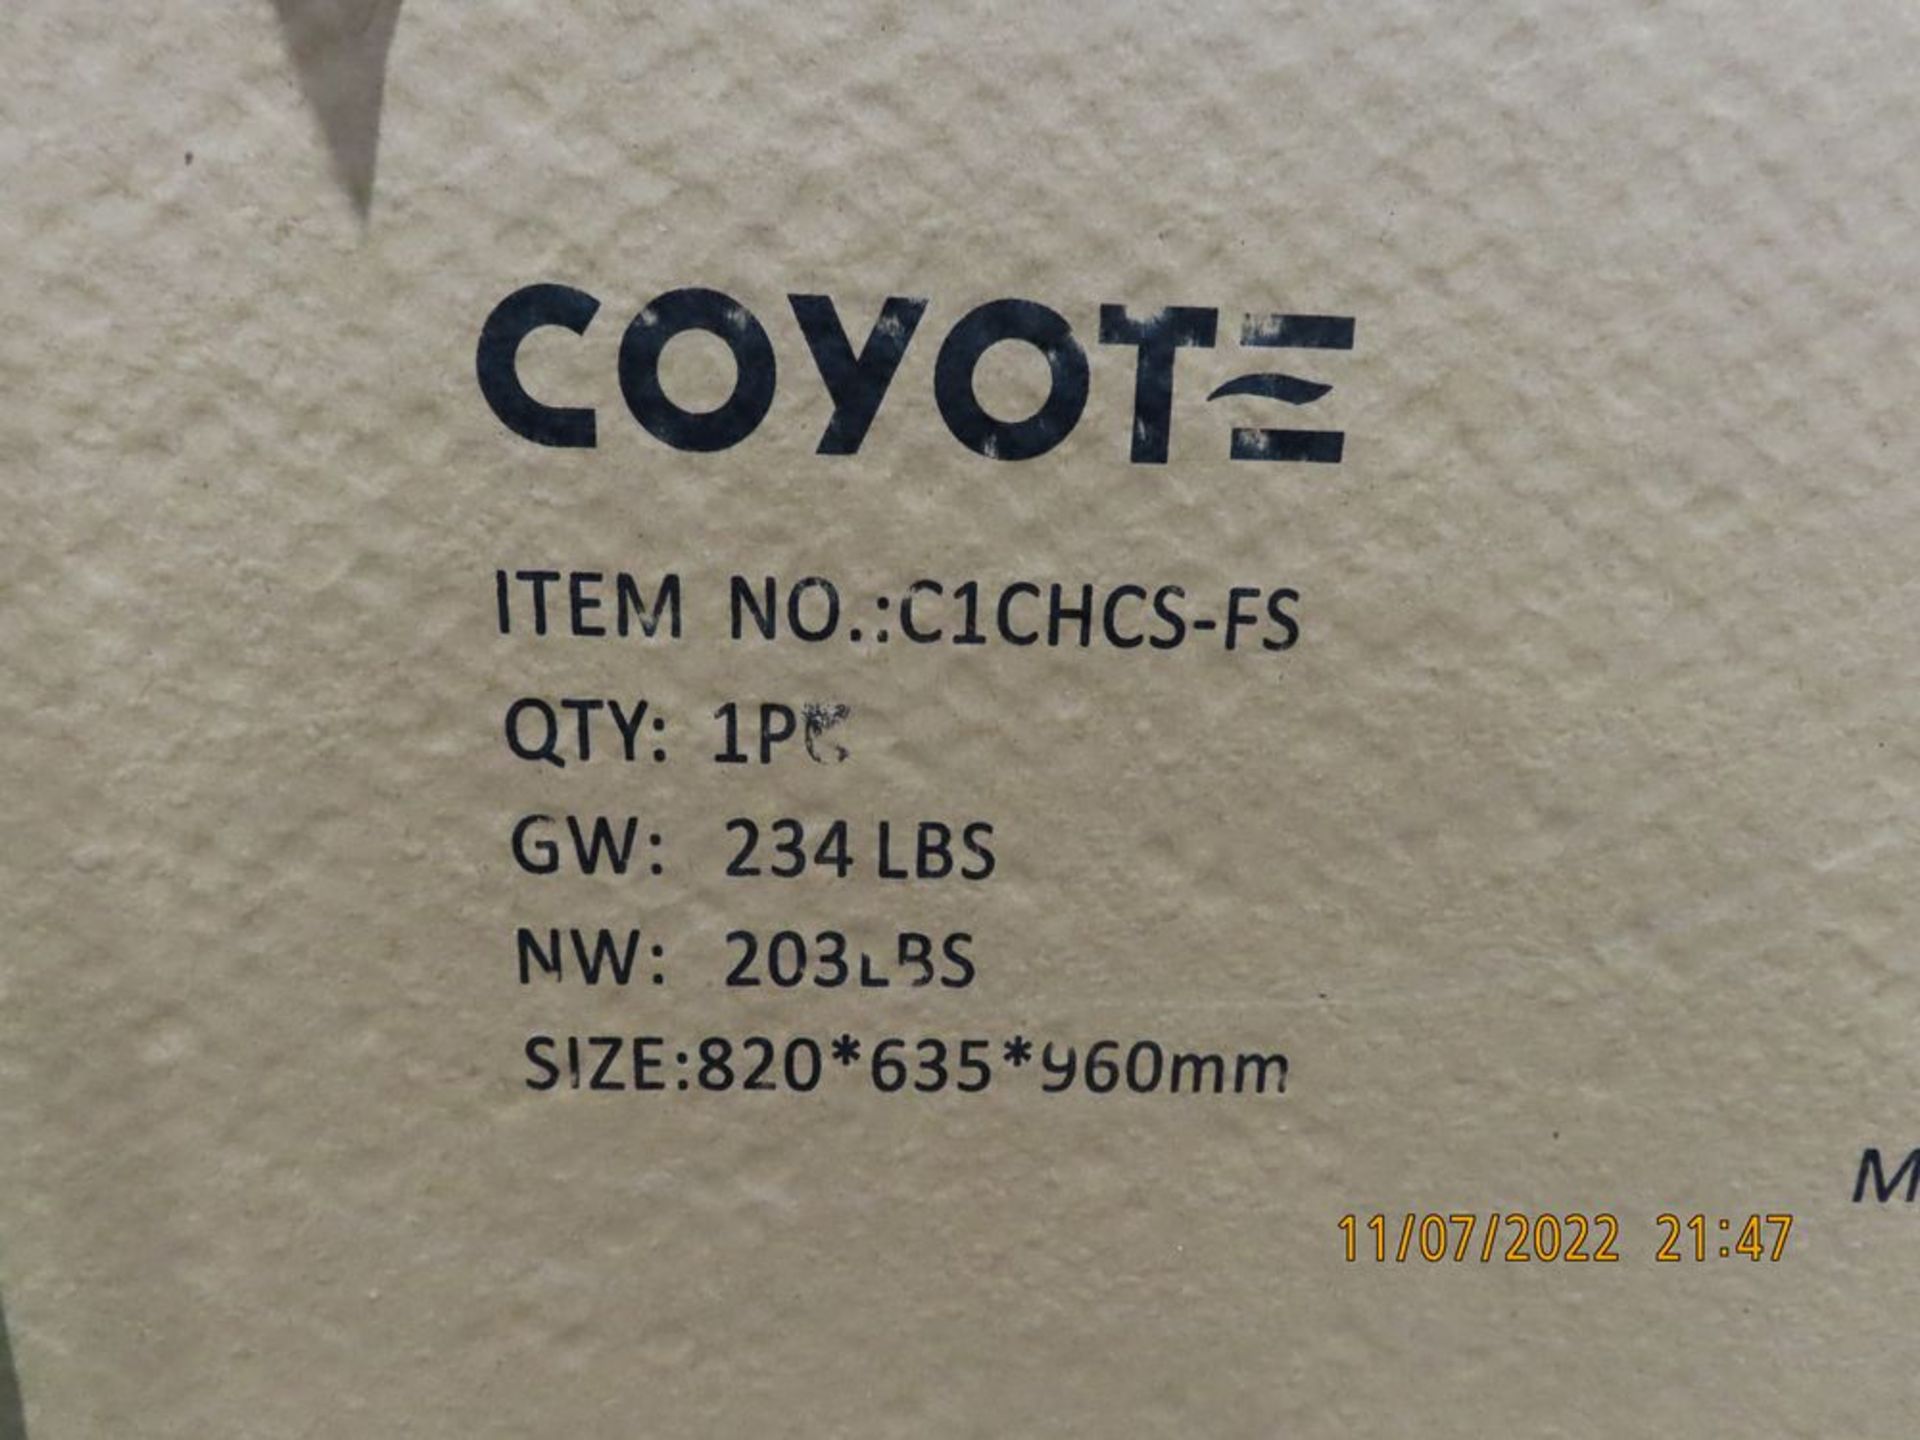 Coyote mod. C1CHCS-FS, CO-Asado Smoker w/ Stand & Side Shelves - Image 3 of 5